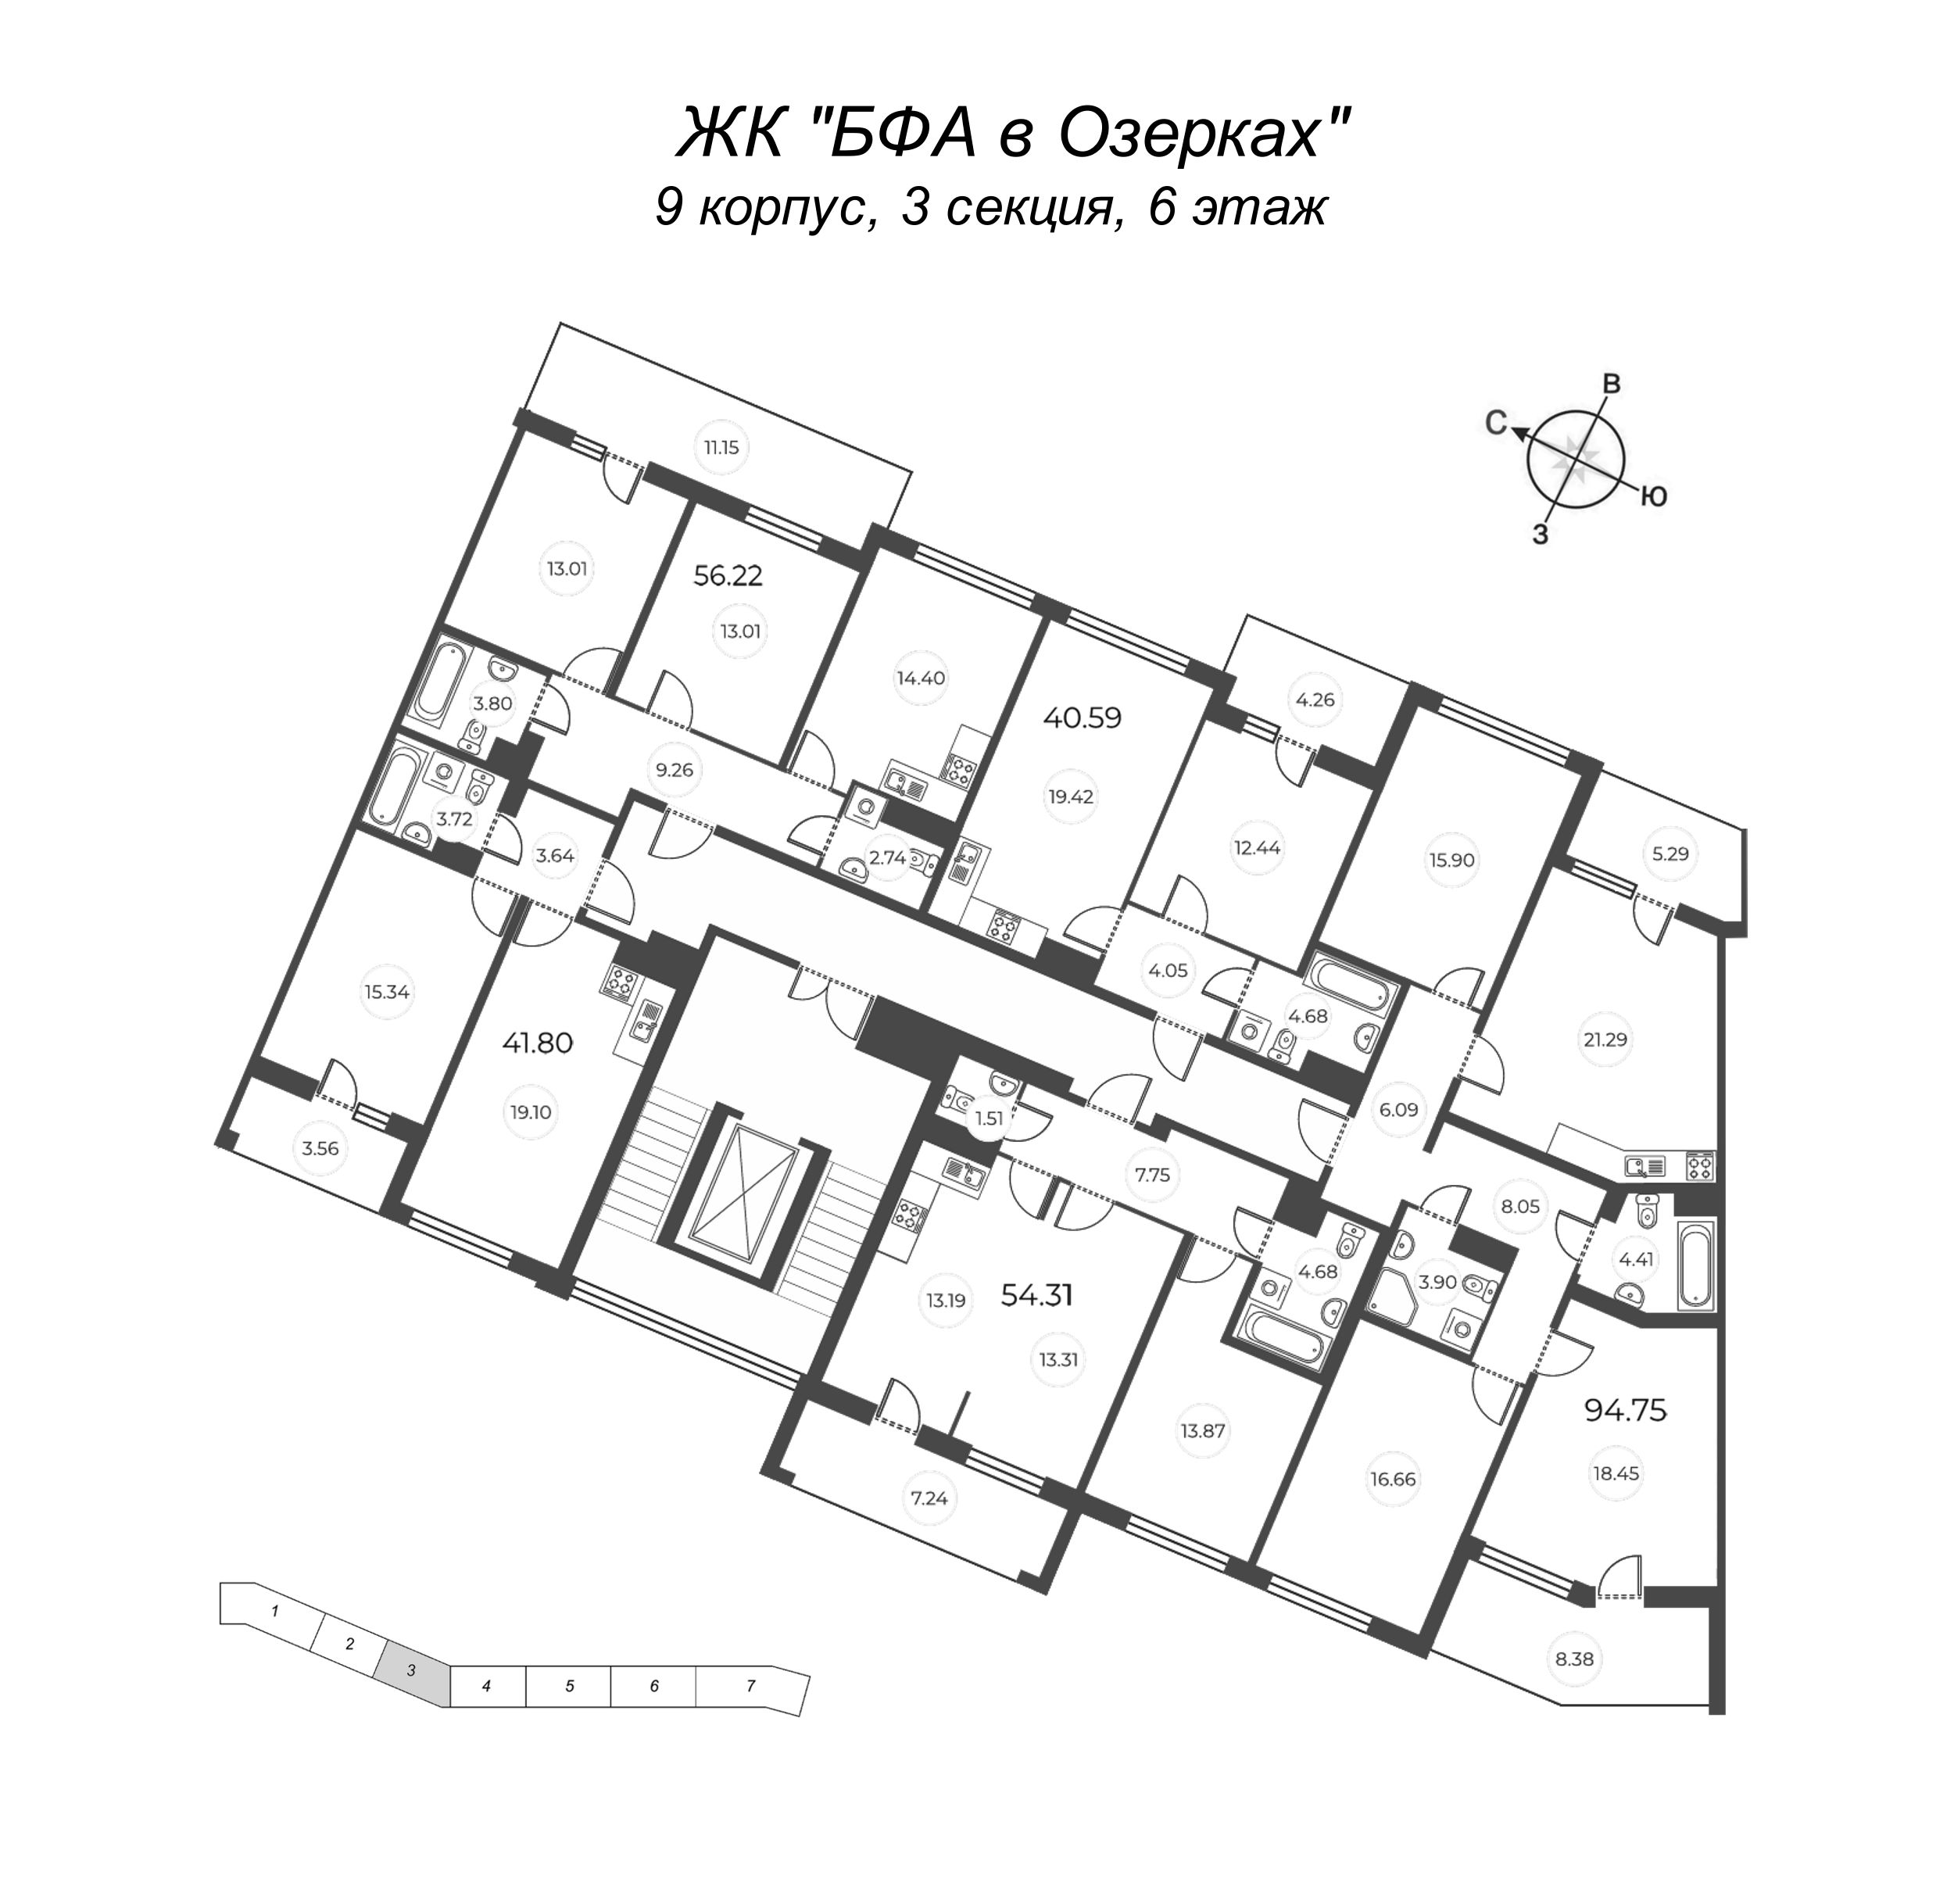 2-комнатная (Евро) квартира, 43.58 м² в ЖК "БФА в Озерках" - планировка этажа